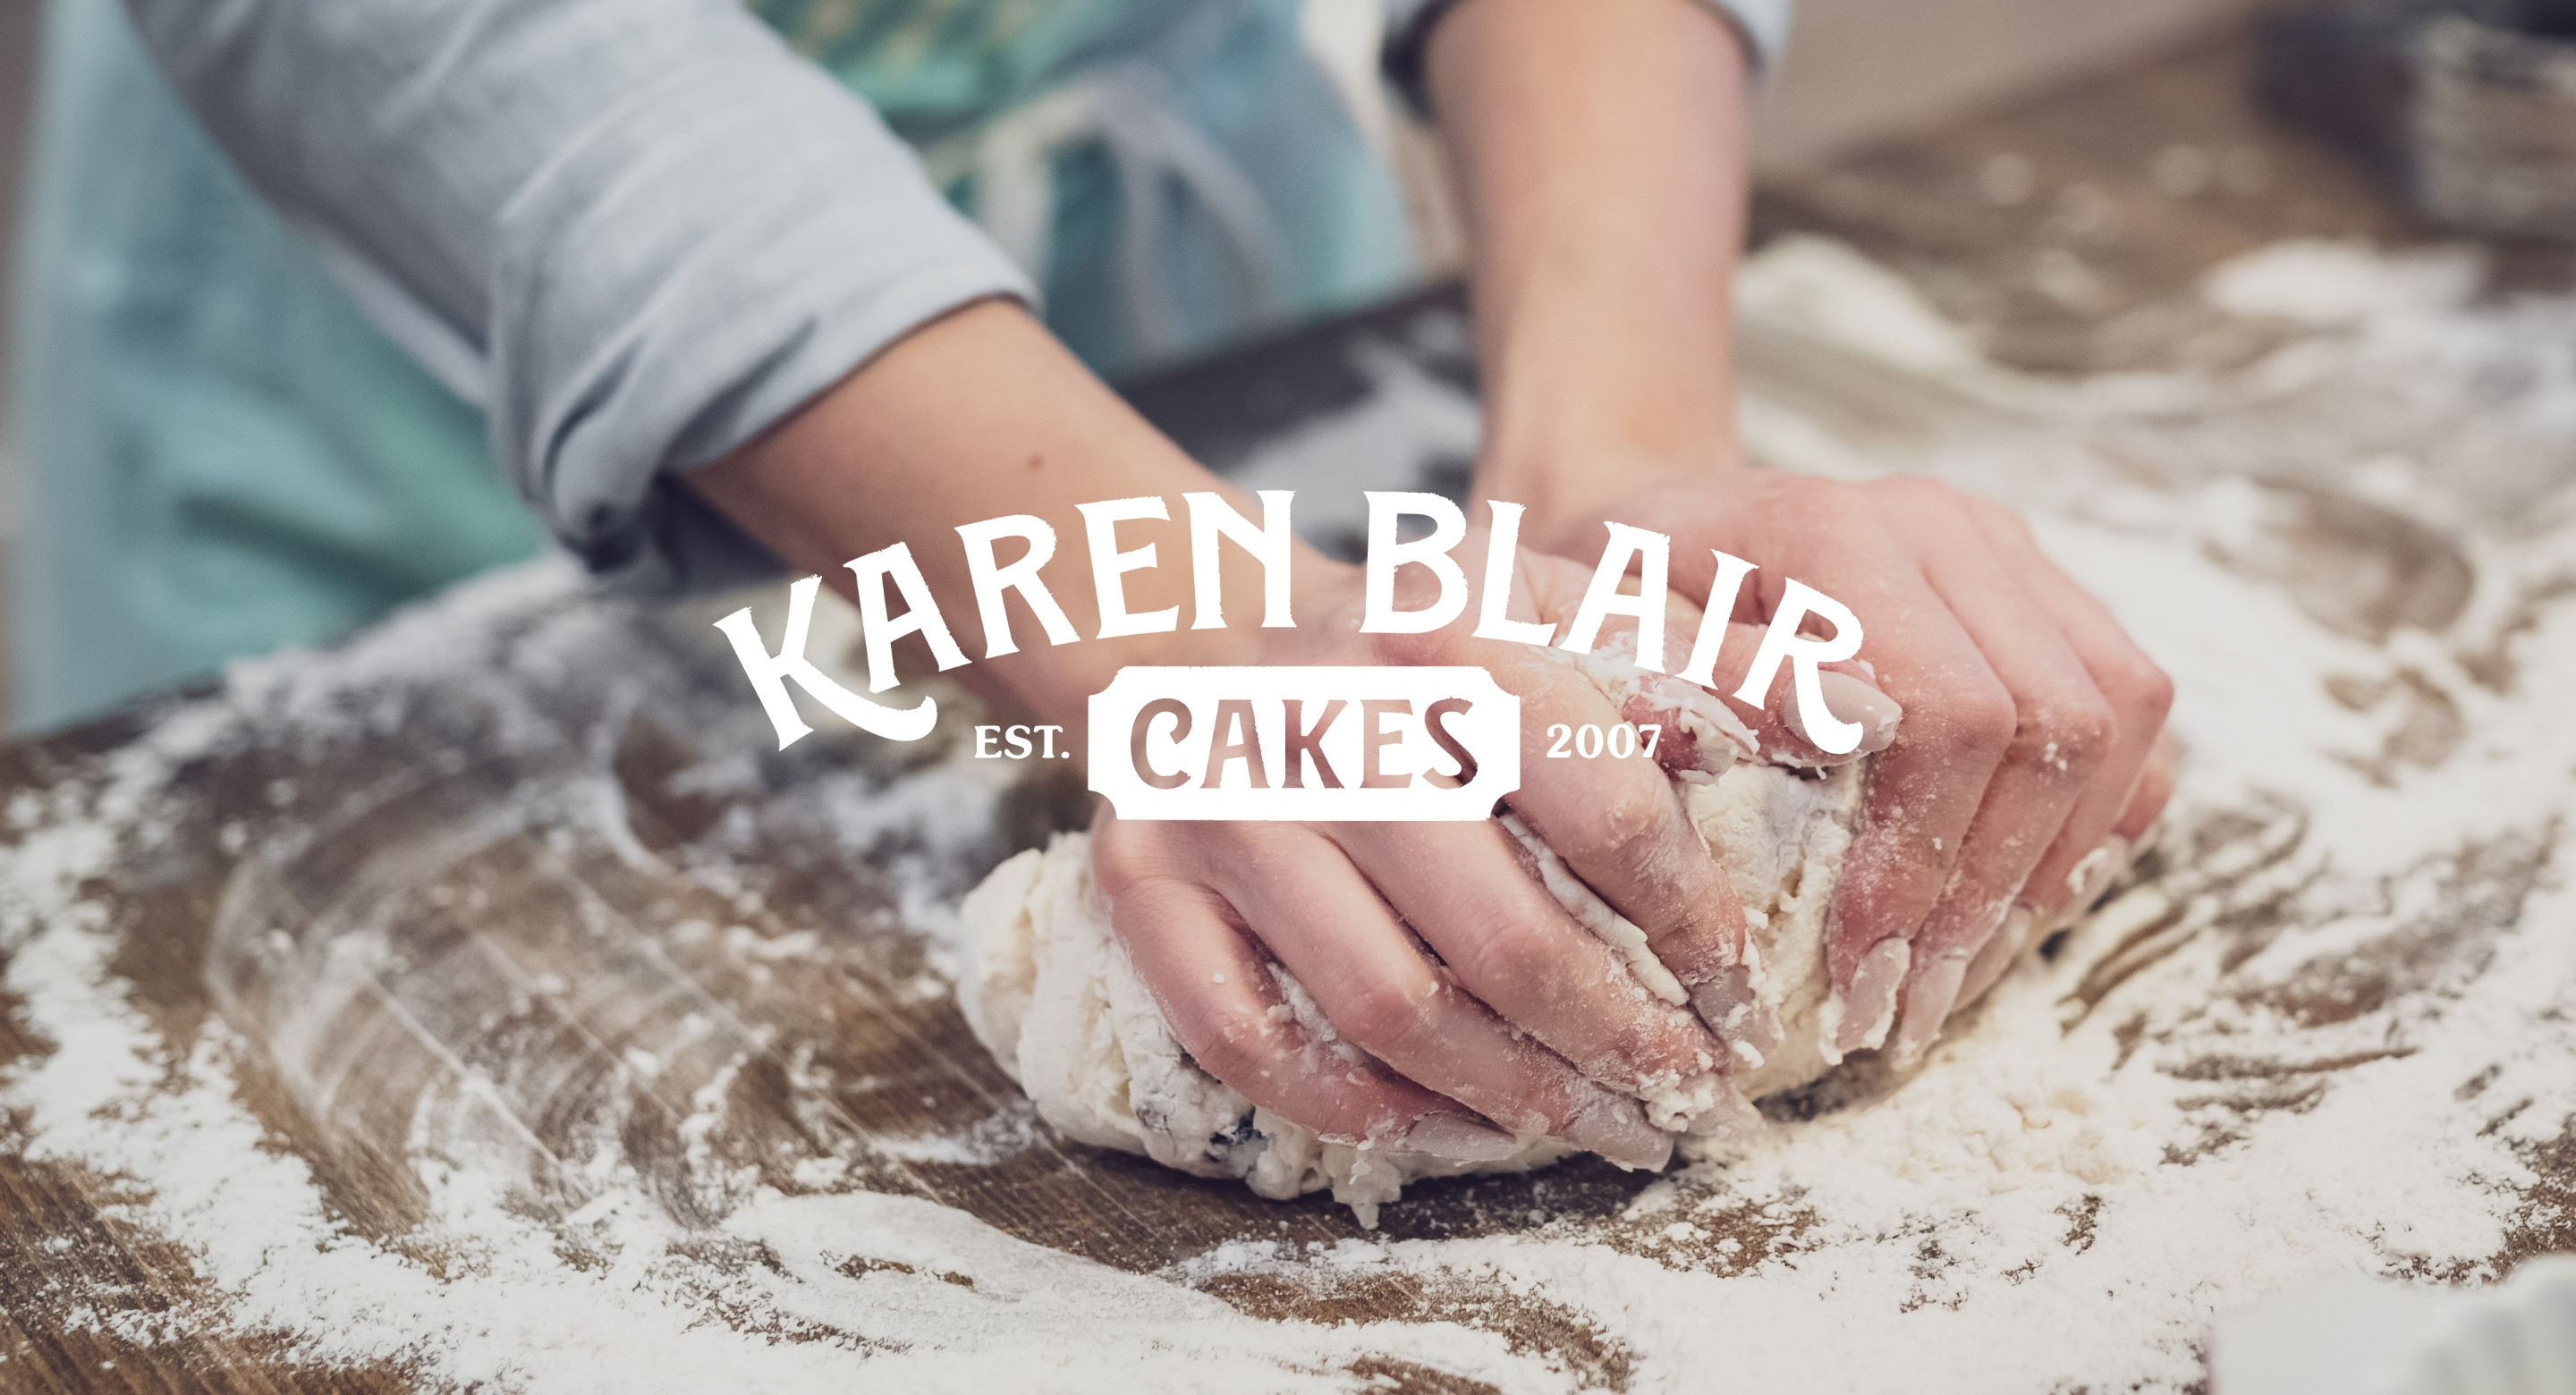 Karen Blair Cakes bakery logo and branding design by Root Studio